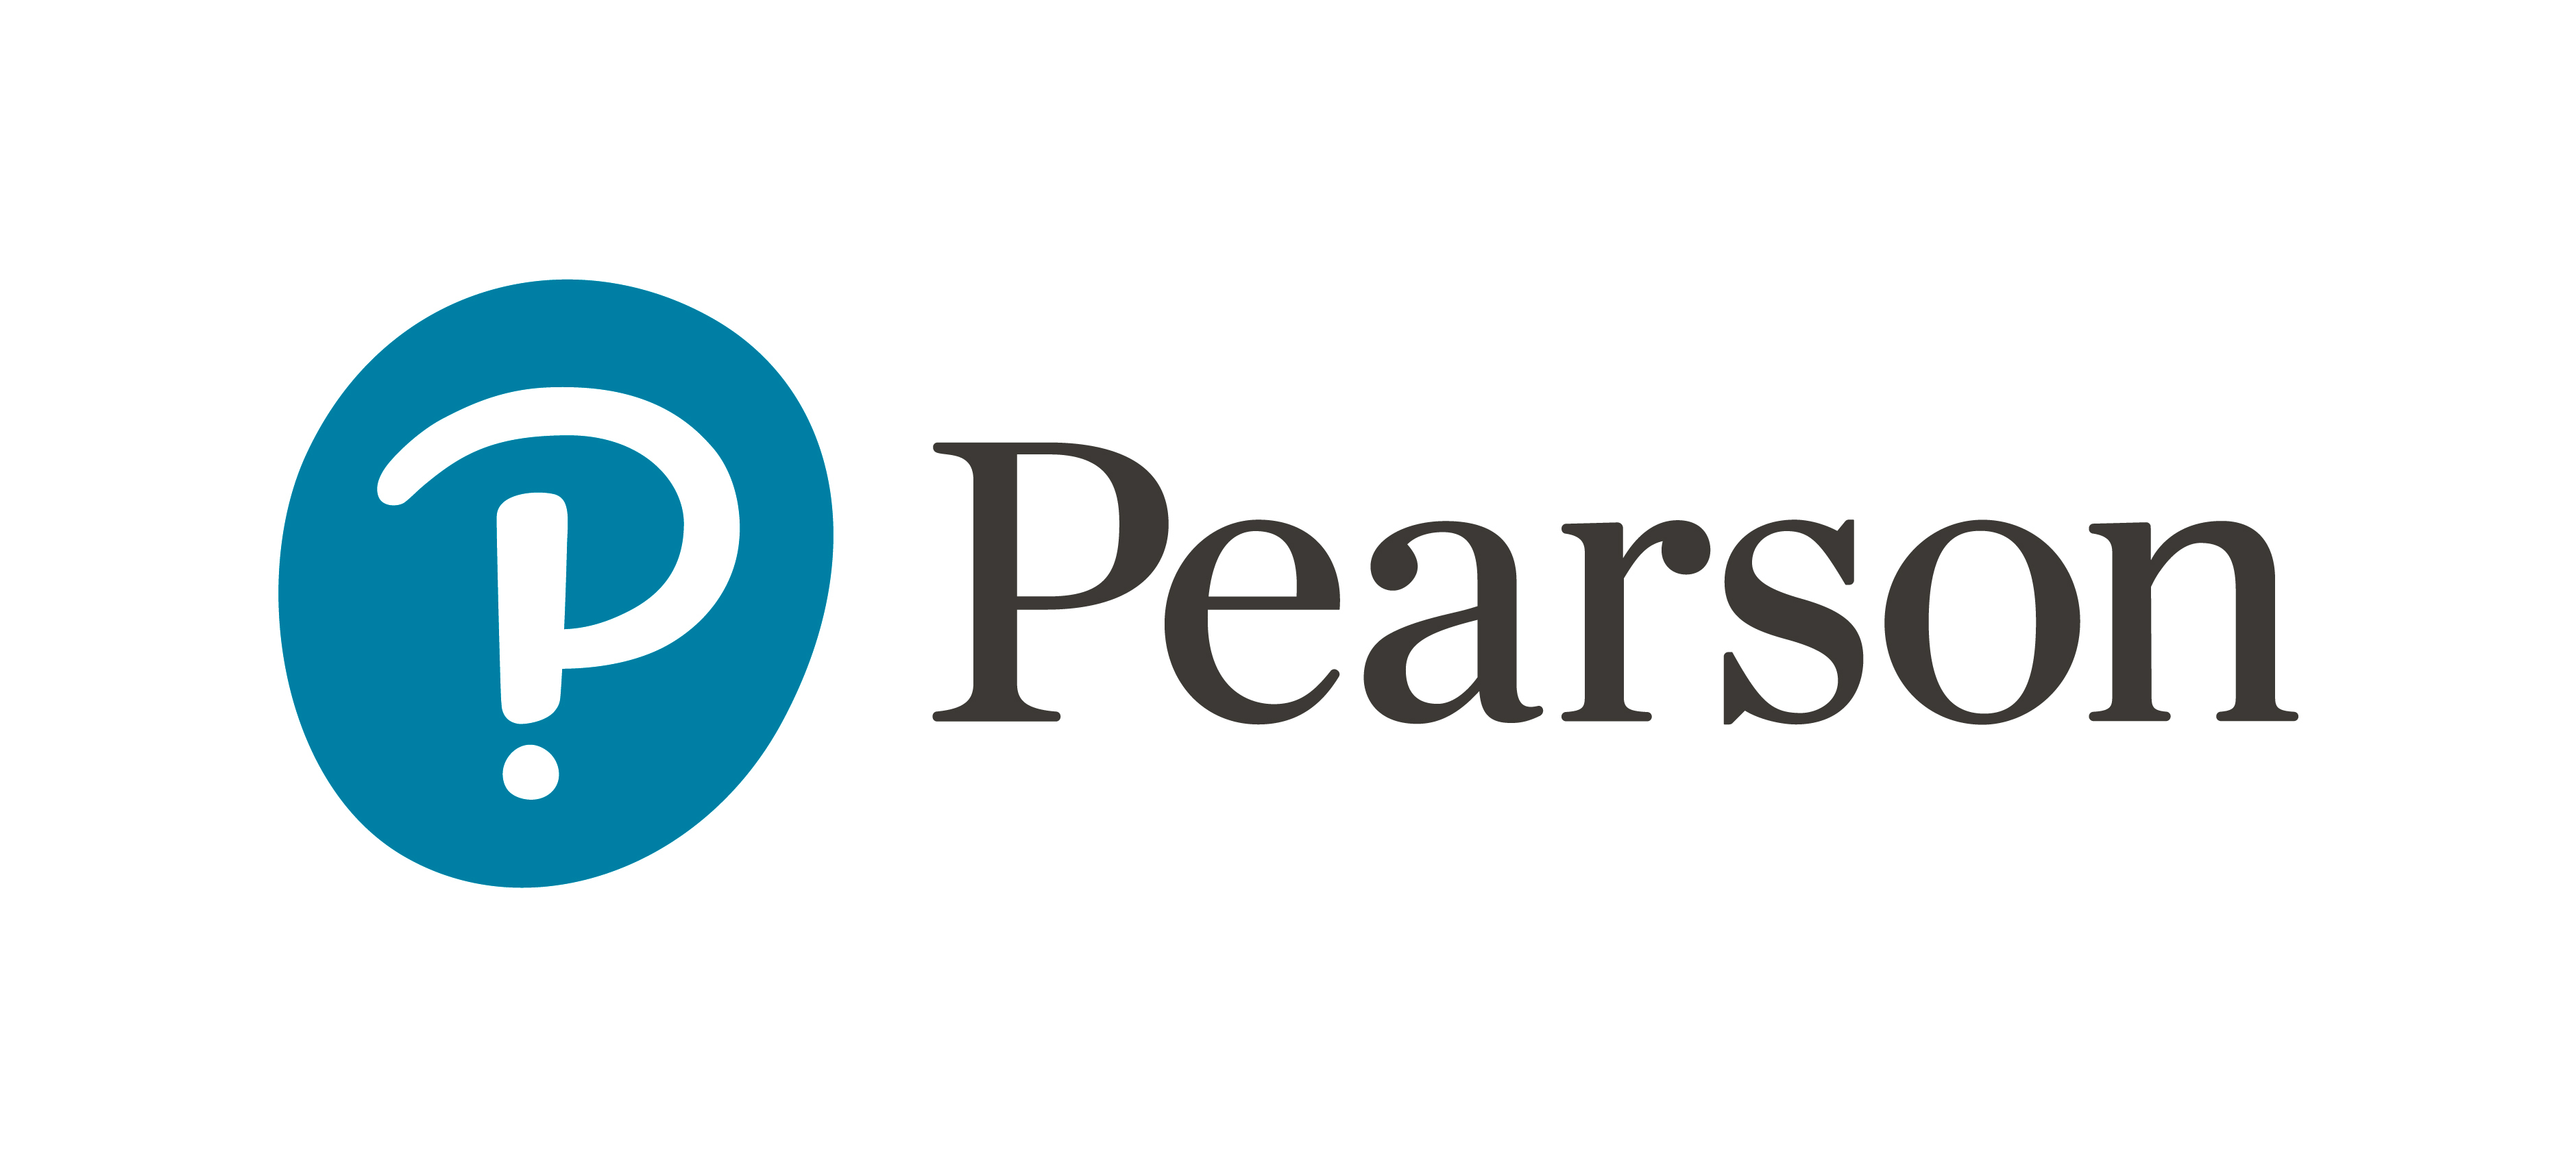 Pearson logo final